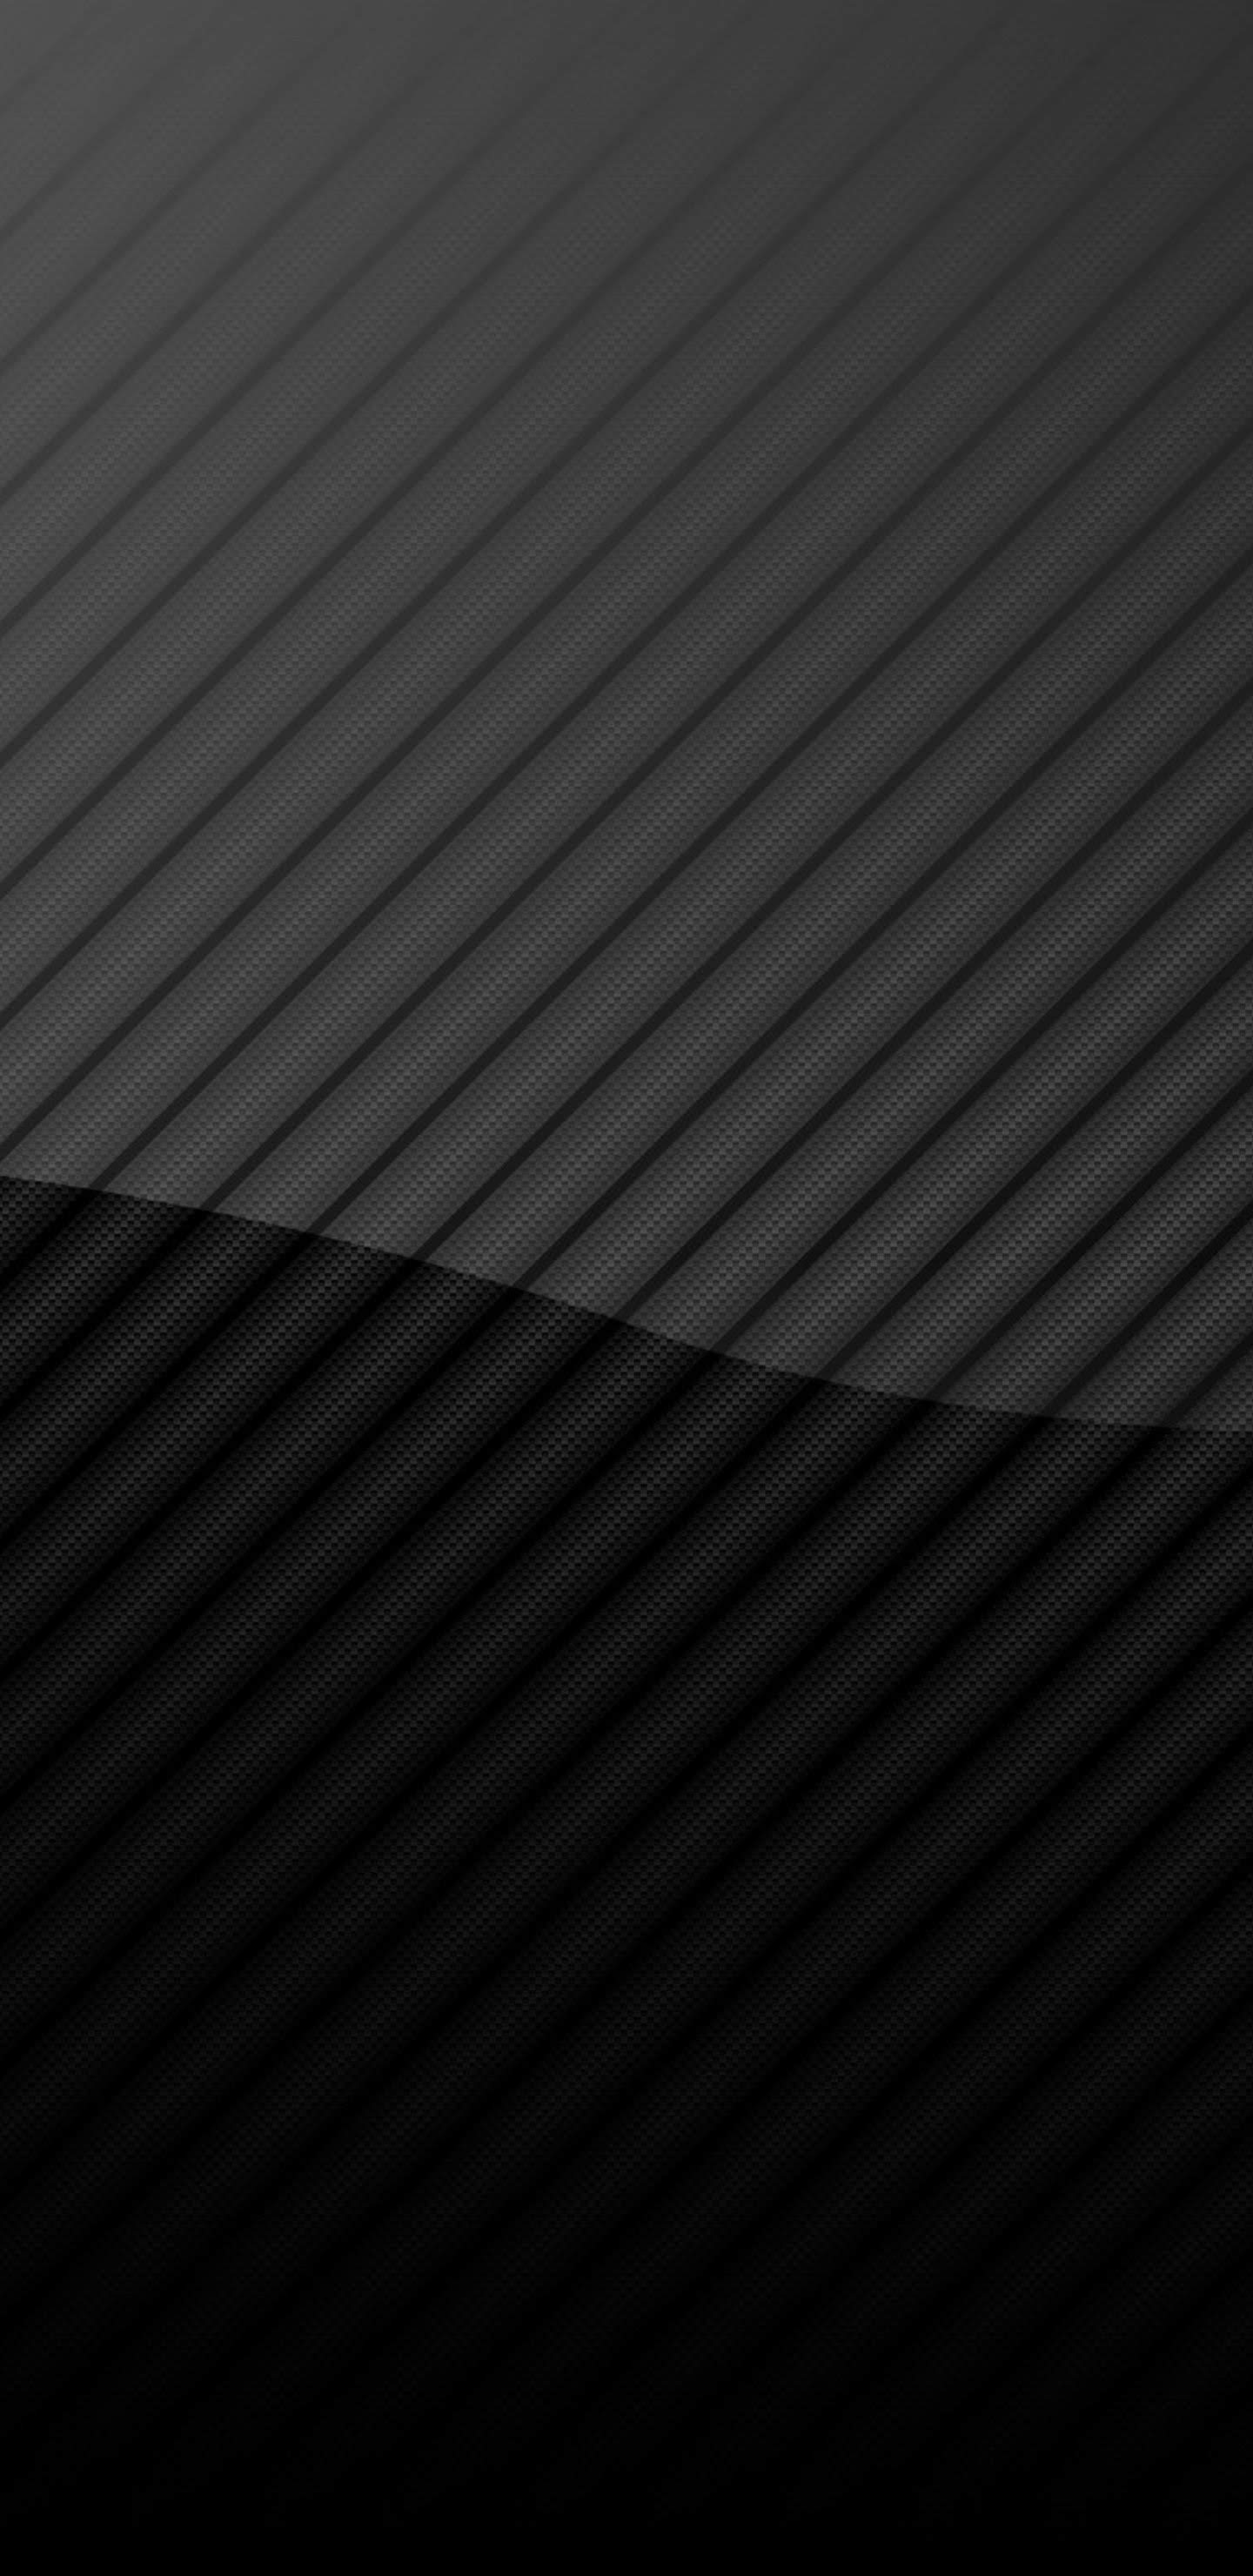 Cool Grey and Black Patterns Wallpaper for Smartphone Screen Wallpaper. Wallpaper Download. High Resolution Wallpaper